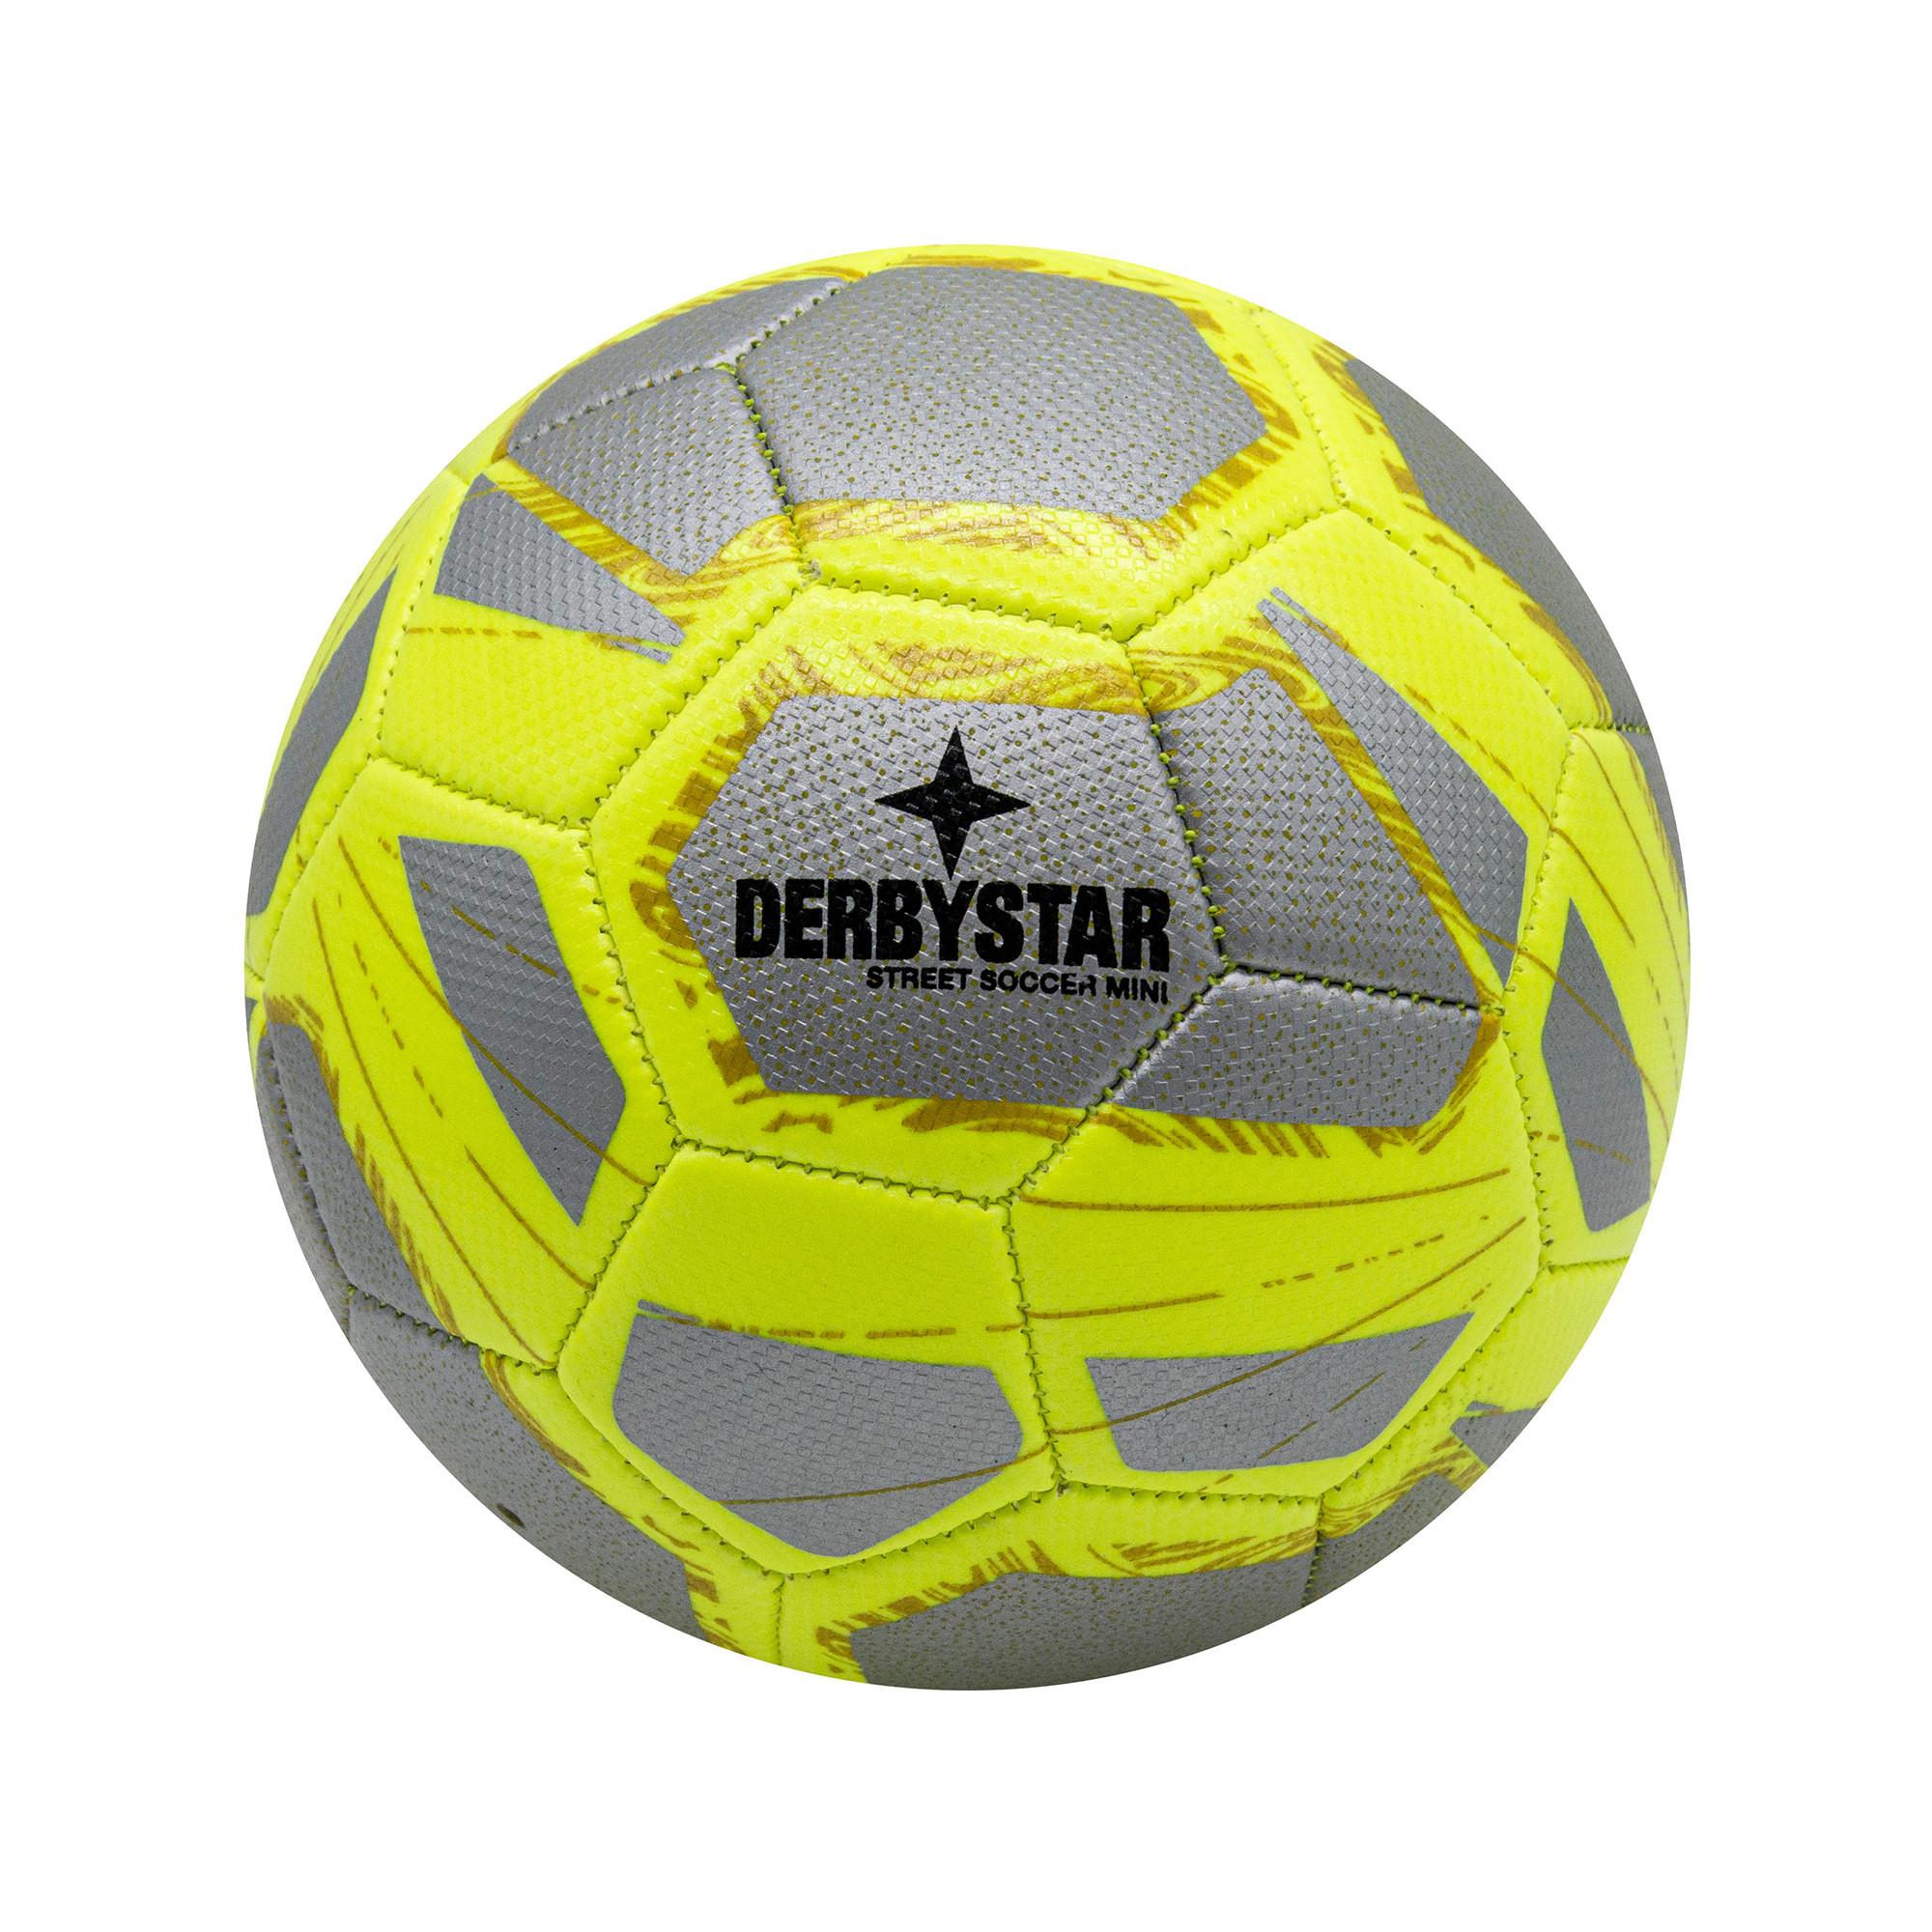 Derbystar  Street Soccer mini foot jaune 